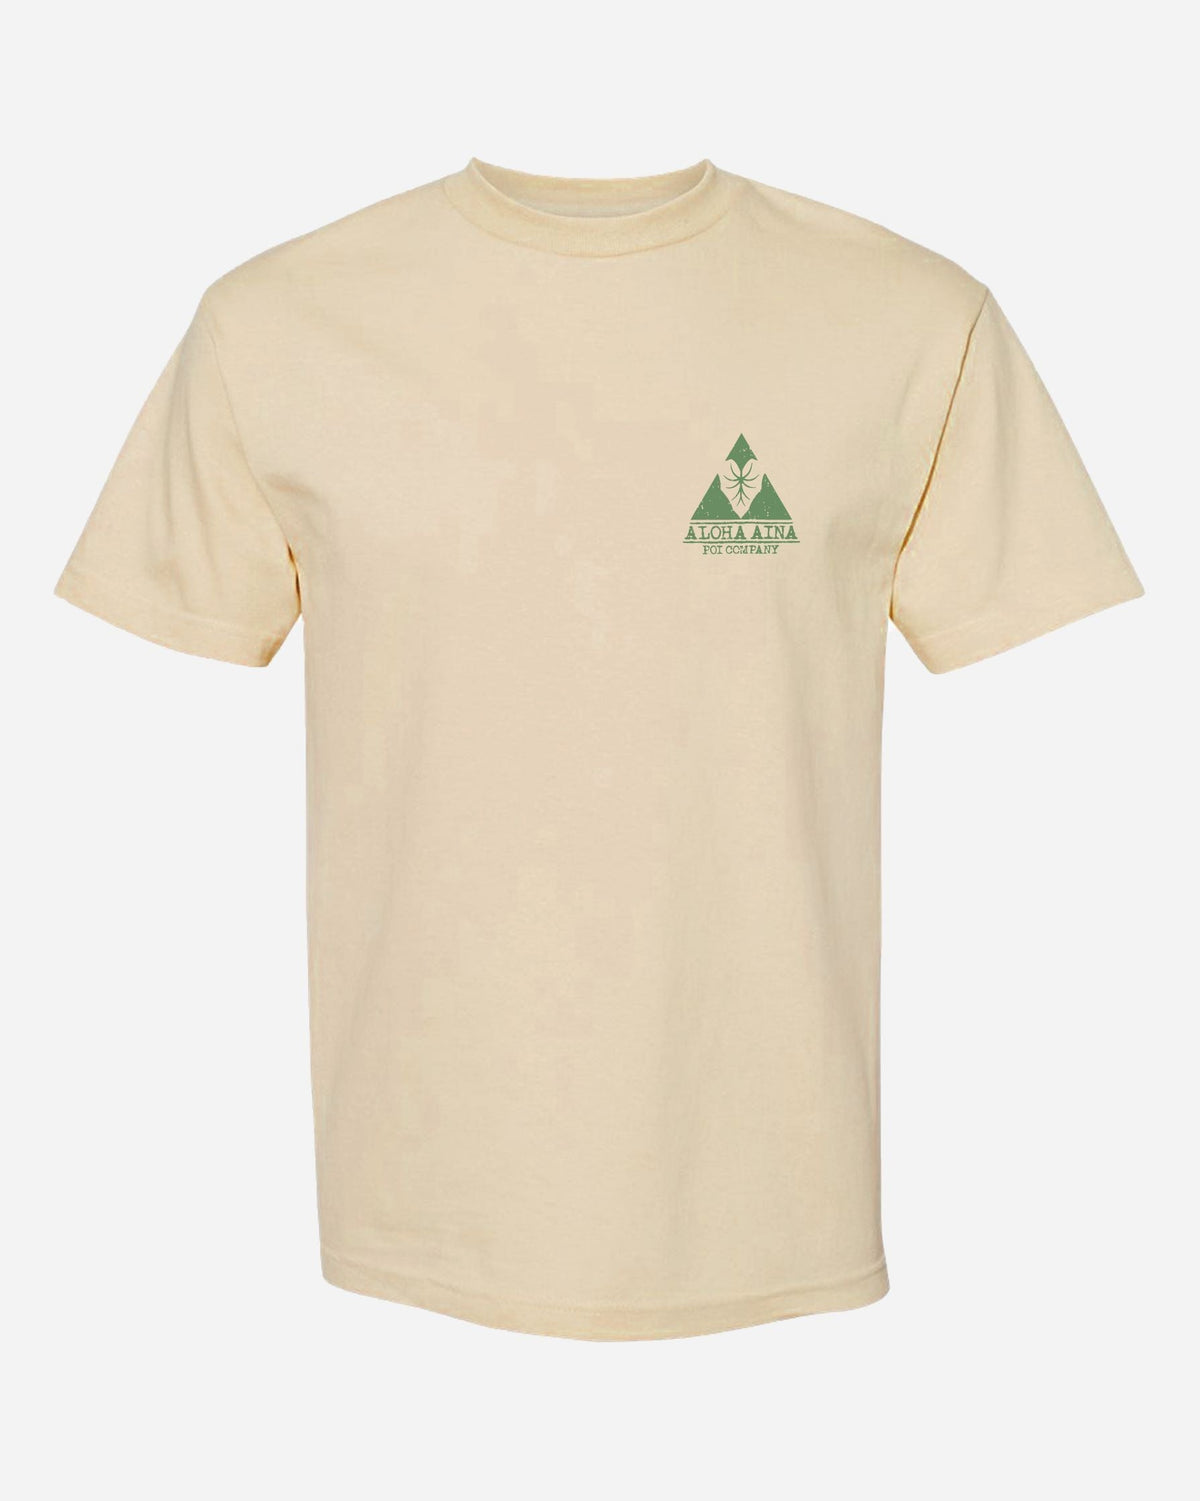 Pop-Up Mākeke - Aloha Aina Poi Co. - Poi Bag Label Men&#39;s Short Sleeve T-Shirt - Brown - Front View